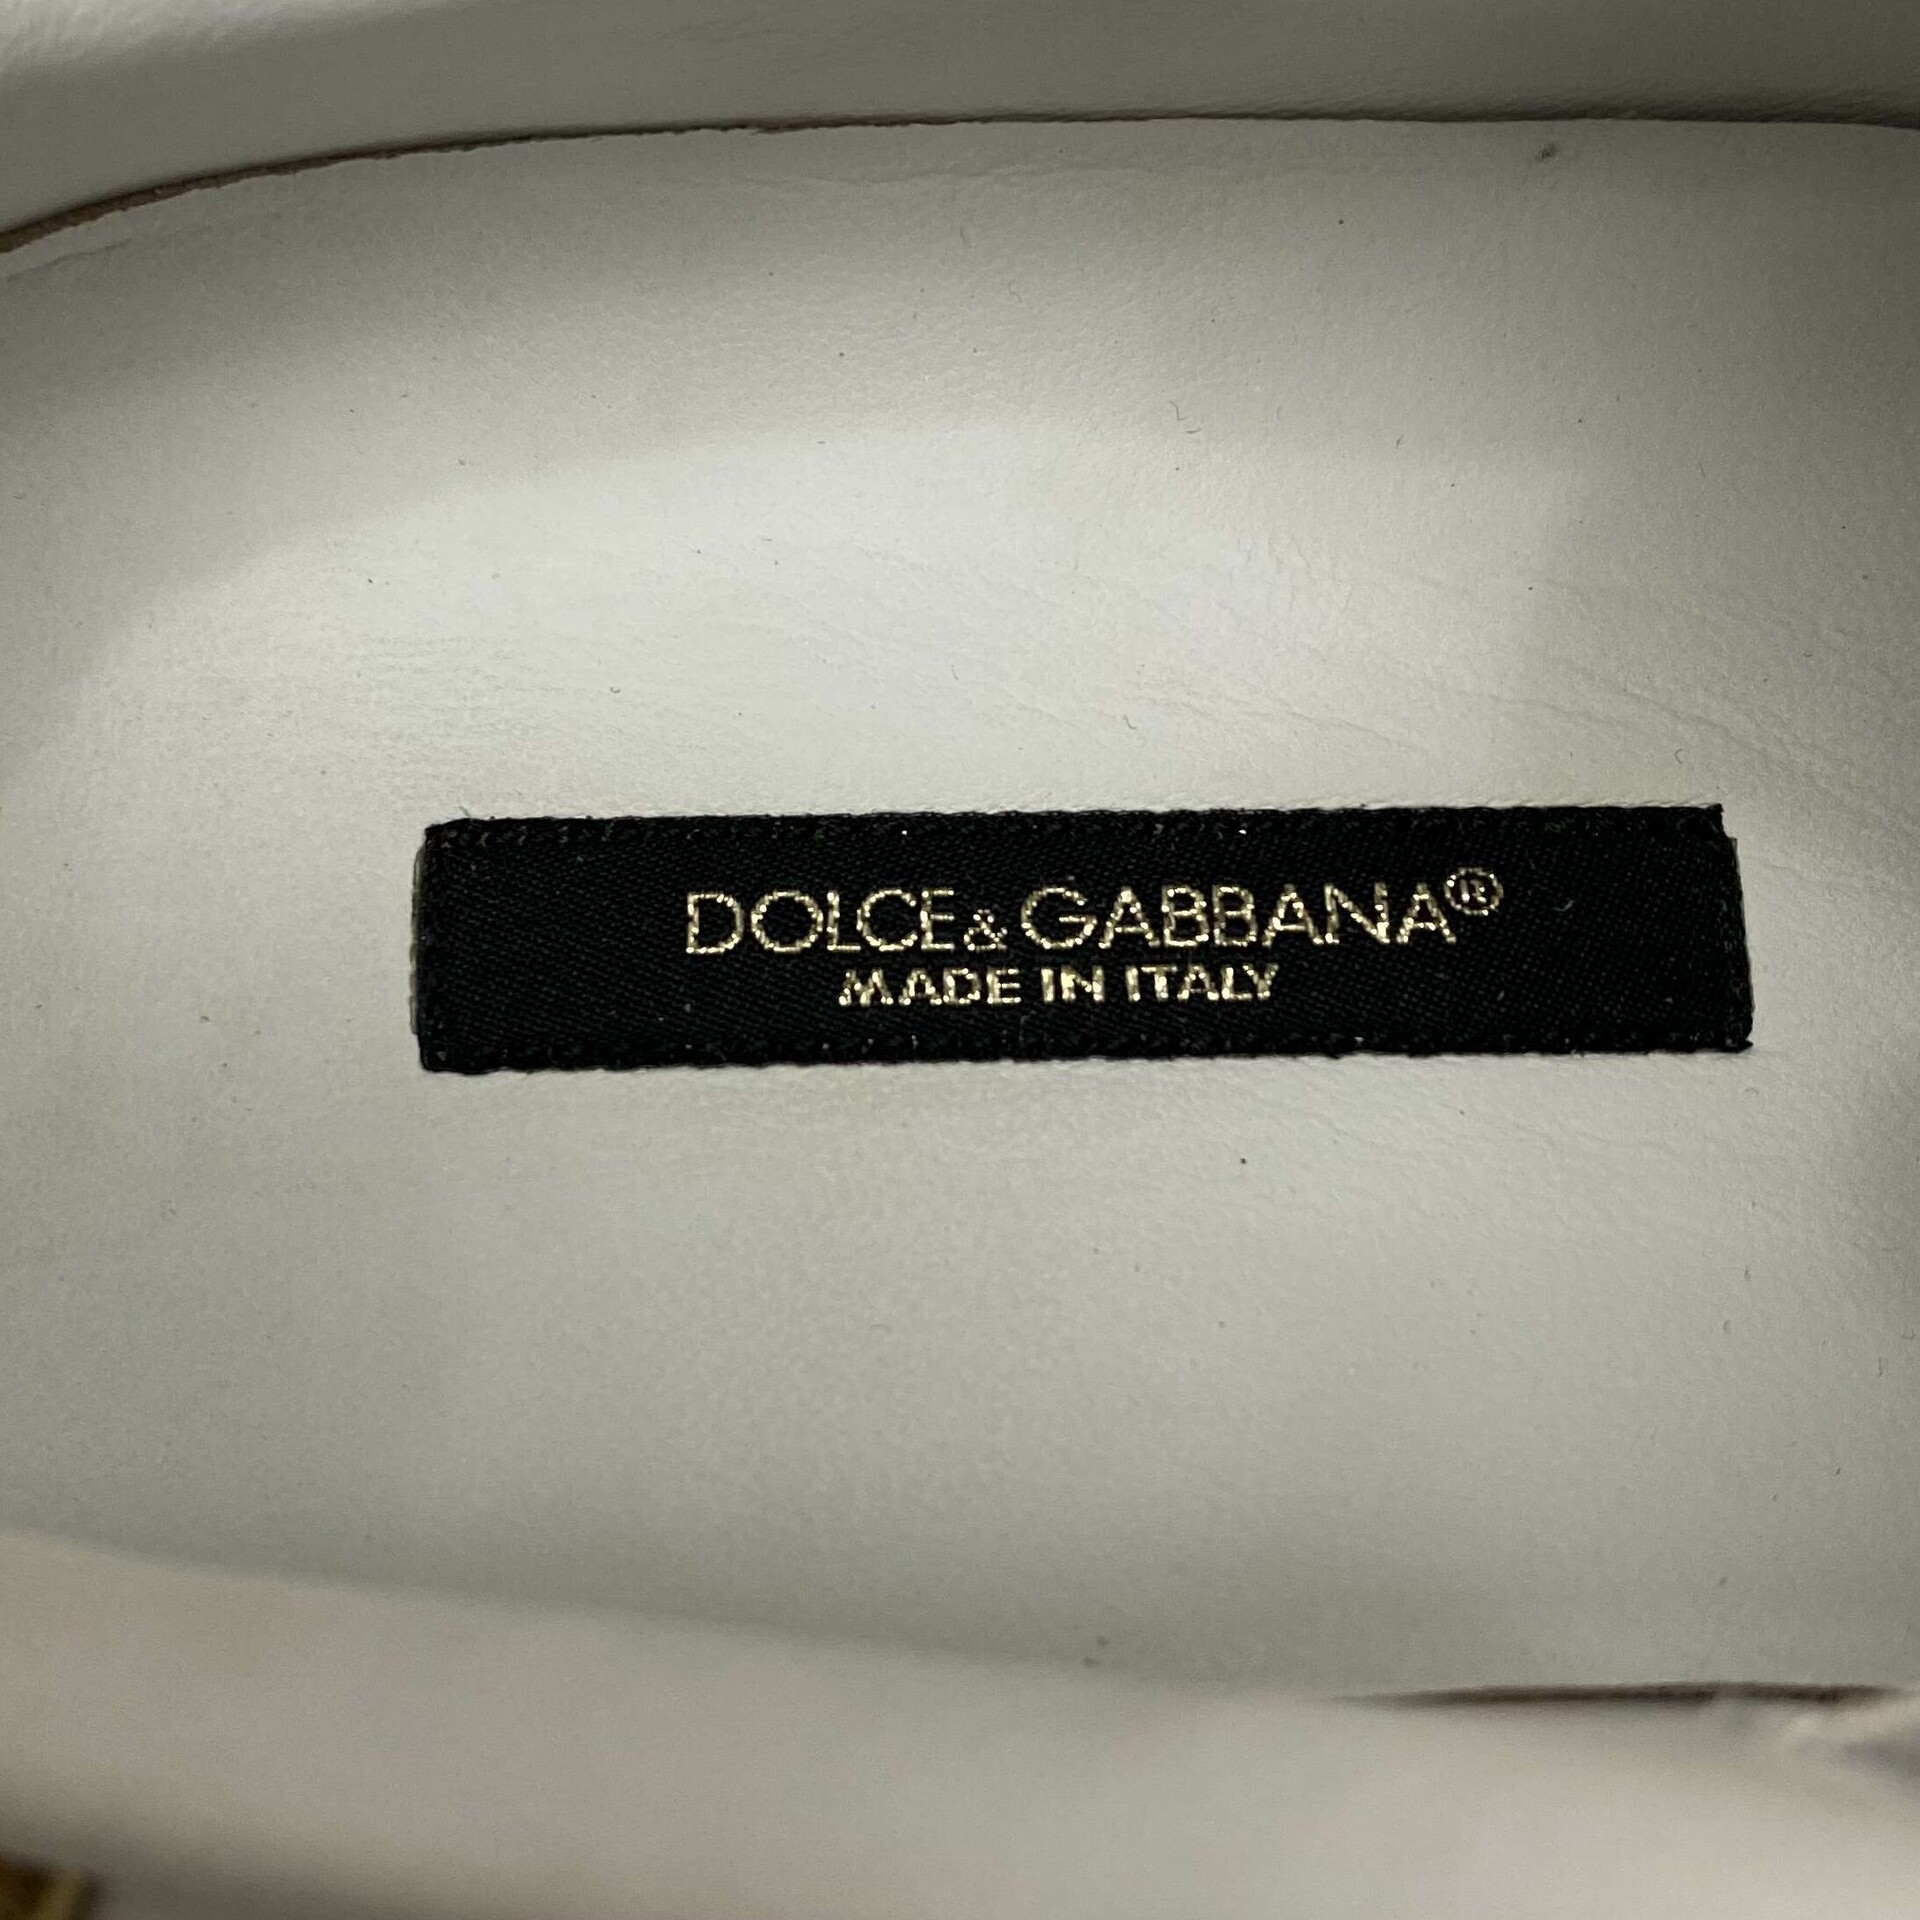 Tênis Dolce & Gabbana Branco e Dourado